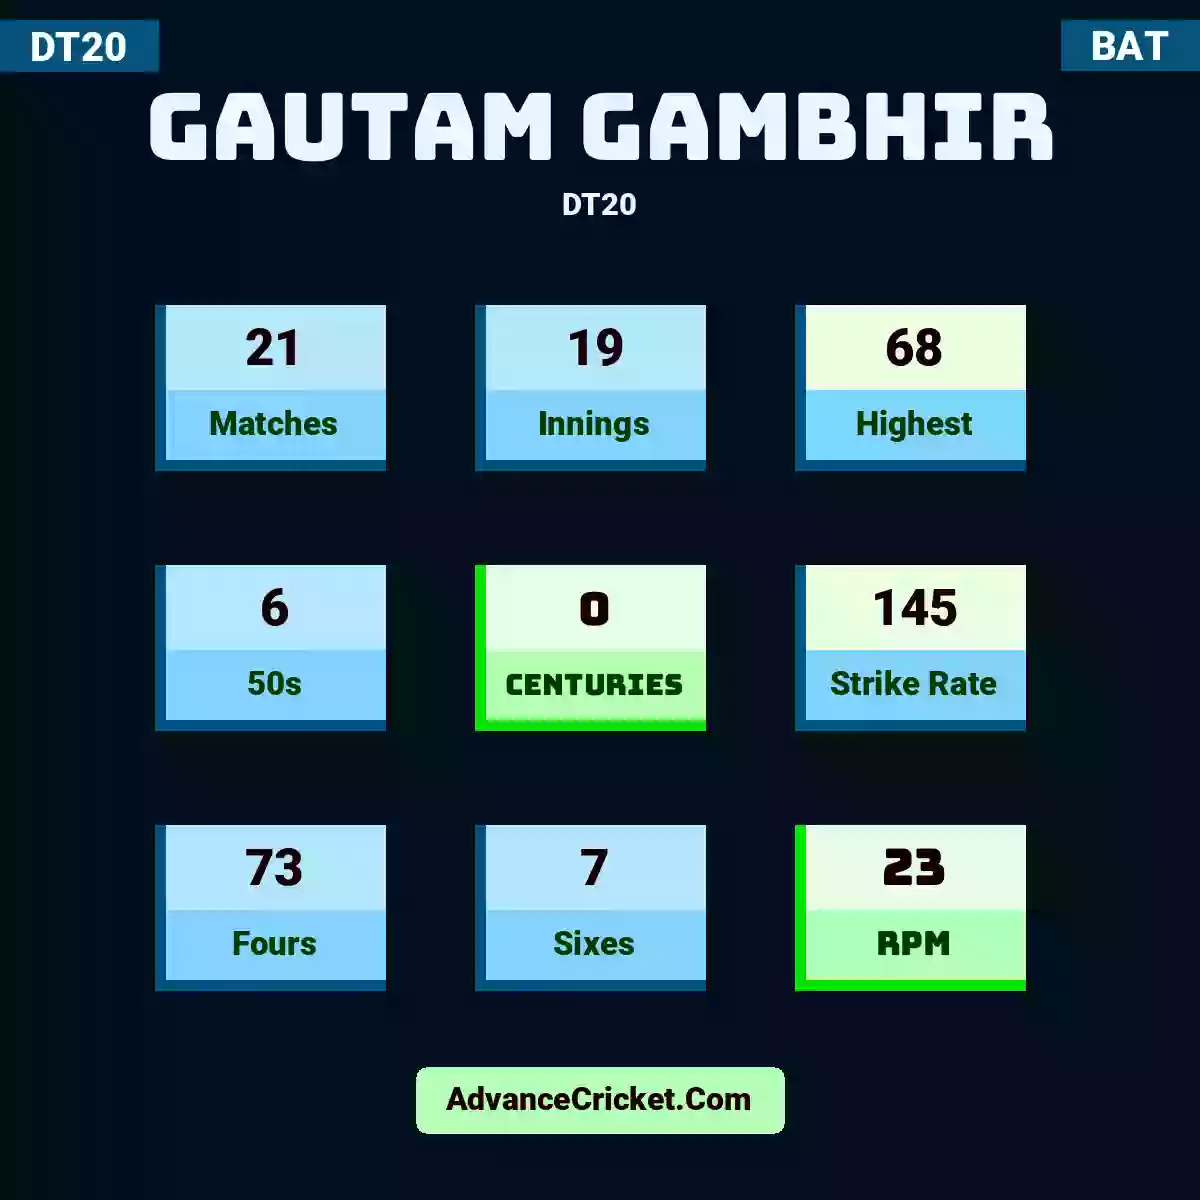 Gautam Gambhir DT20 , Gautam Gambhir played 21 matches, scored 68 runs as highest, 6 half-centuries, and 0 centuries, with a strike rate of 145. G.Gambhir hit 73 fours and 7 sixes, with an RPM of 23.